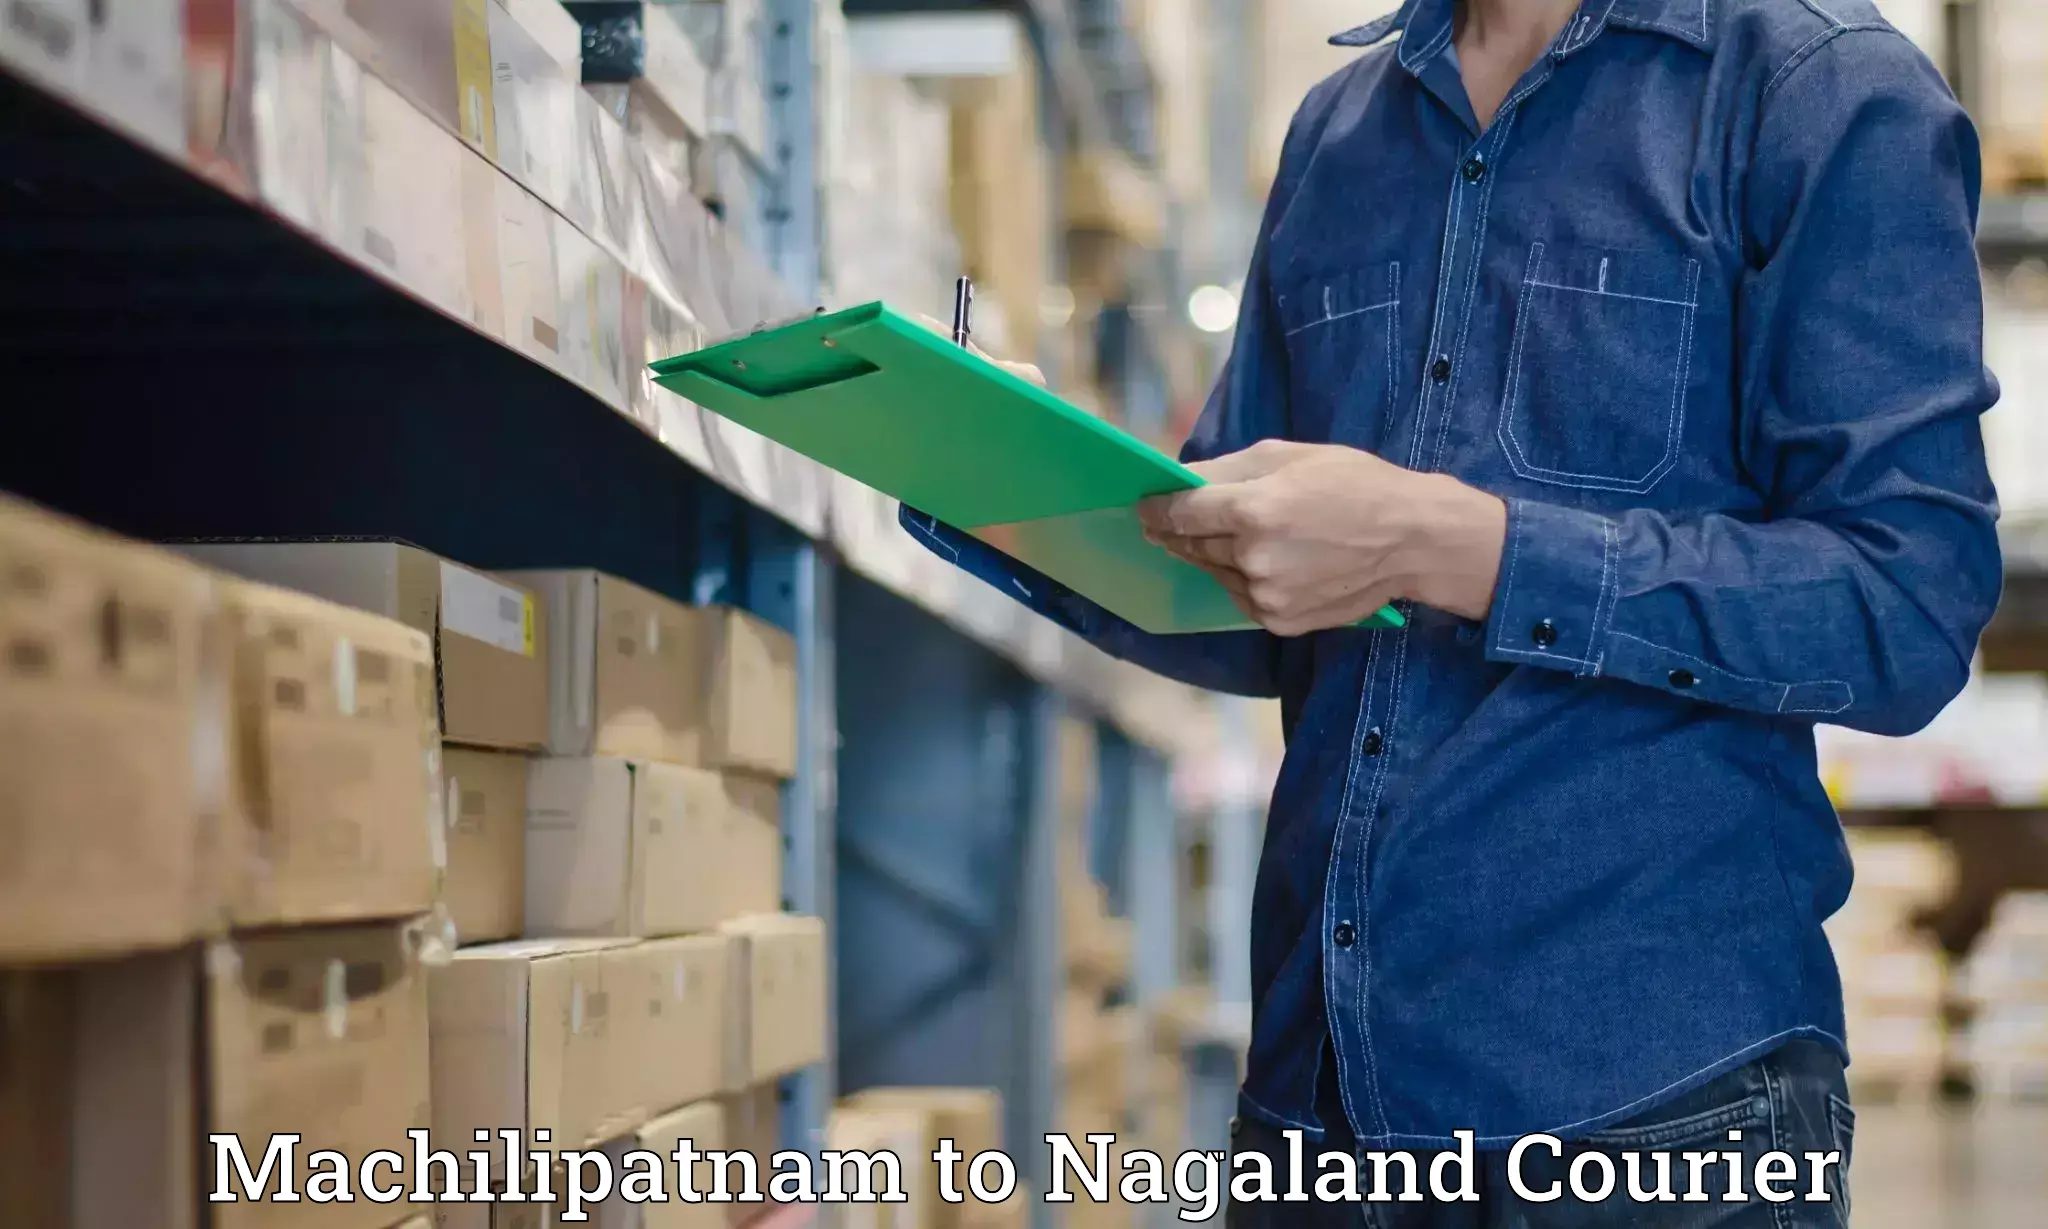 Nationwide delivery network Machilipatnam to Nagaland